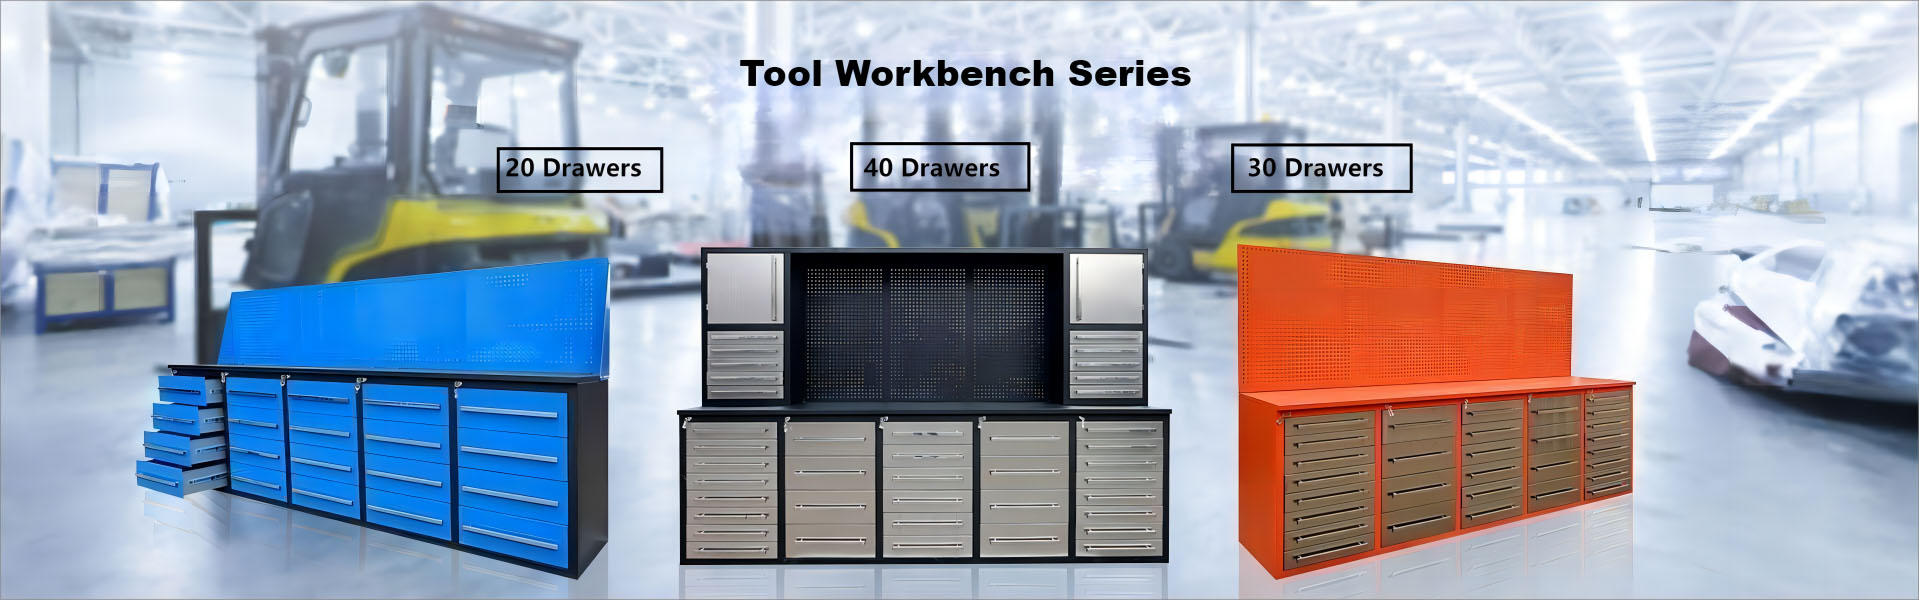 tool-workbench